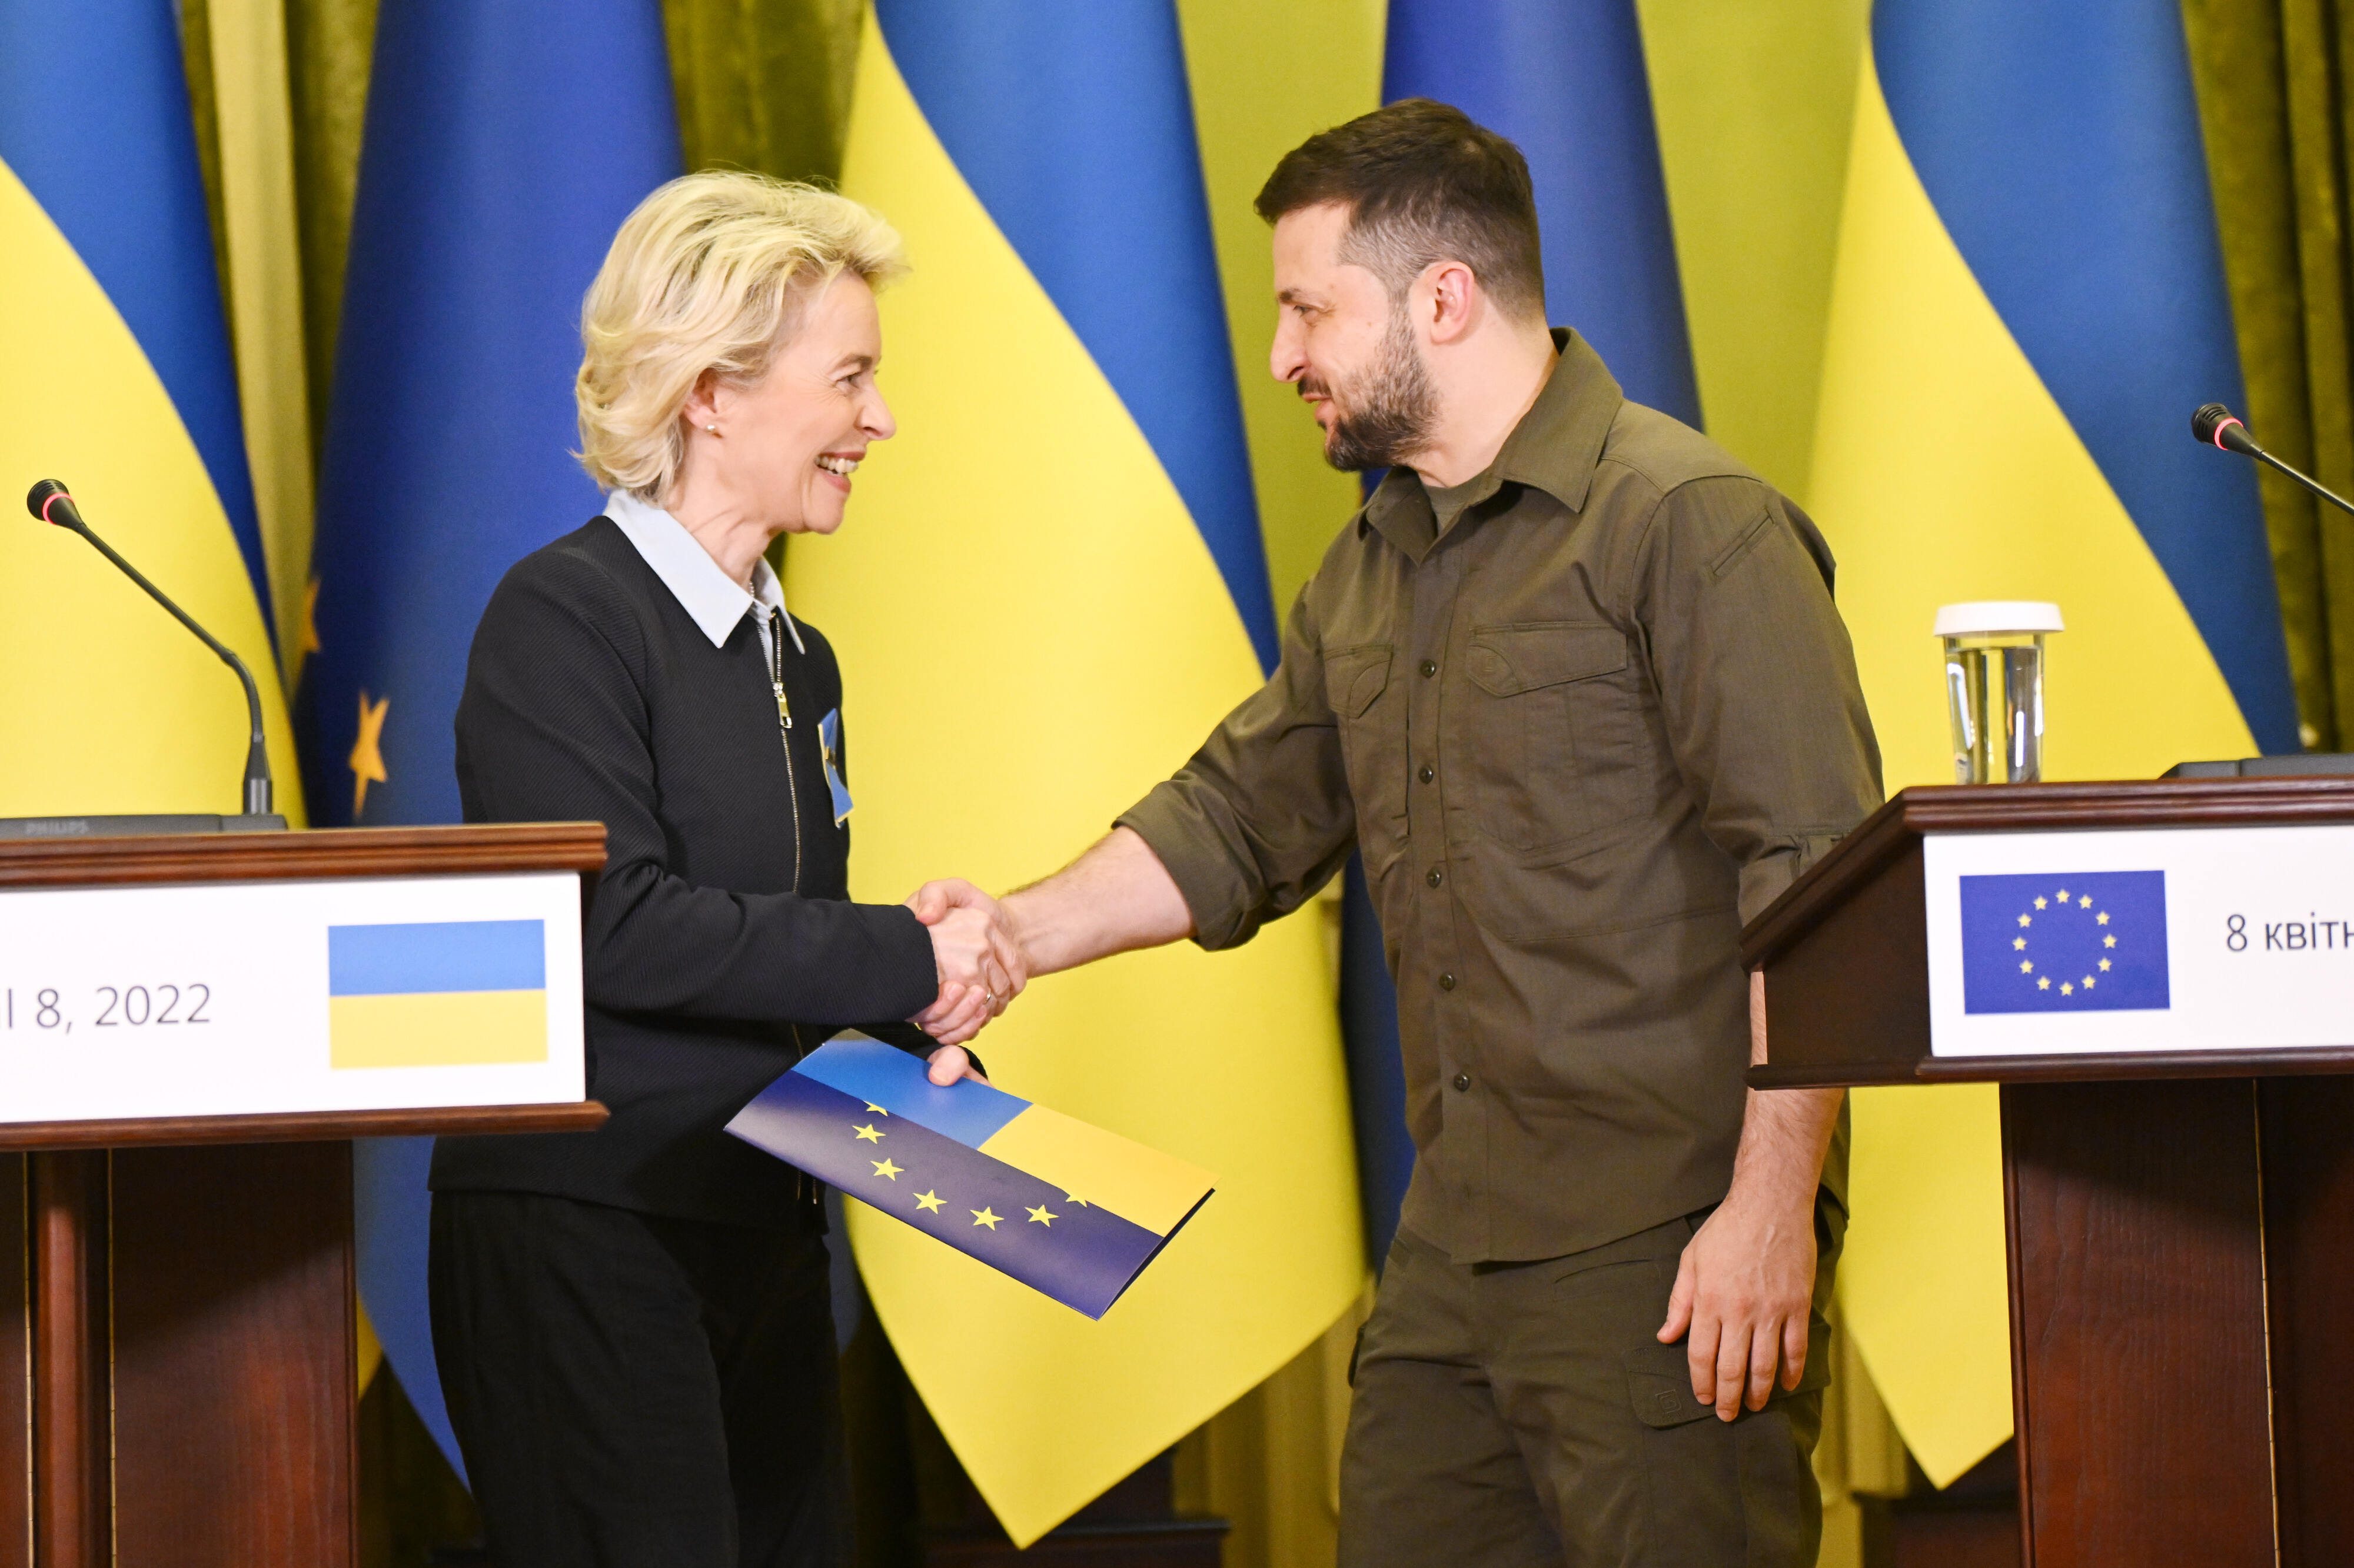 Ursula von der Leyen and Josep Borrell meet Volodymyr Zelenskyy in Kyivâââââââ